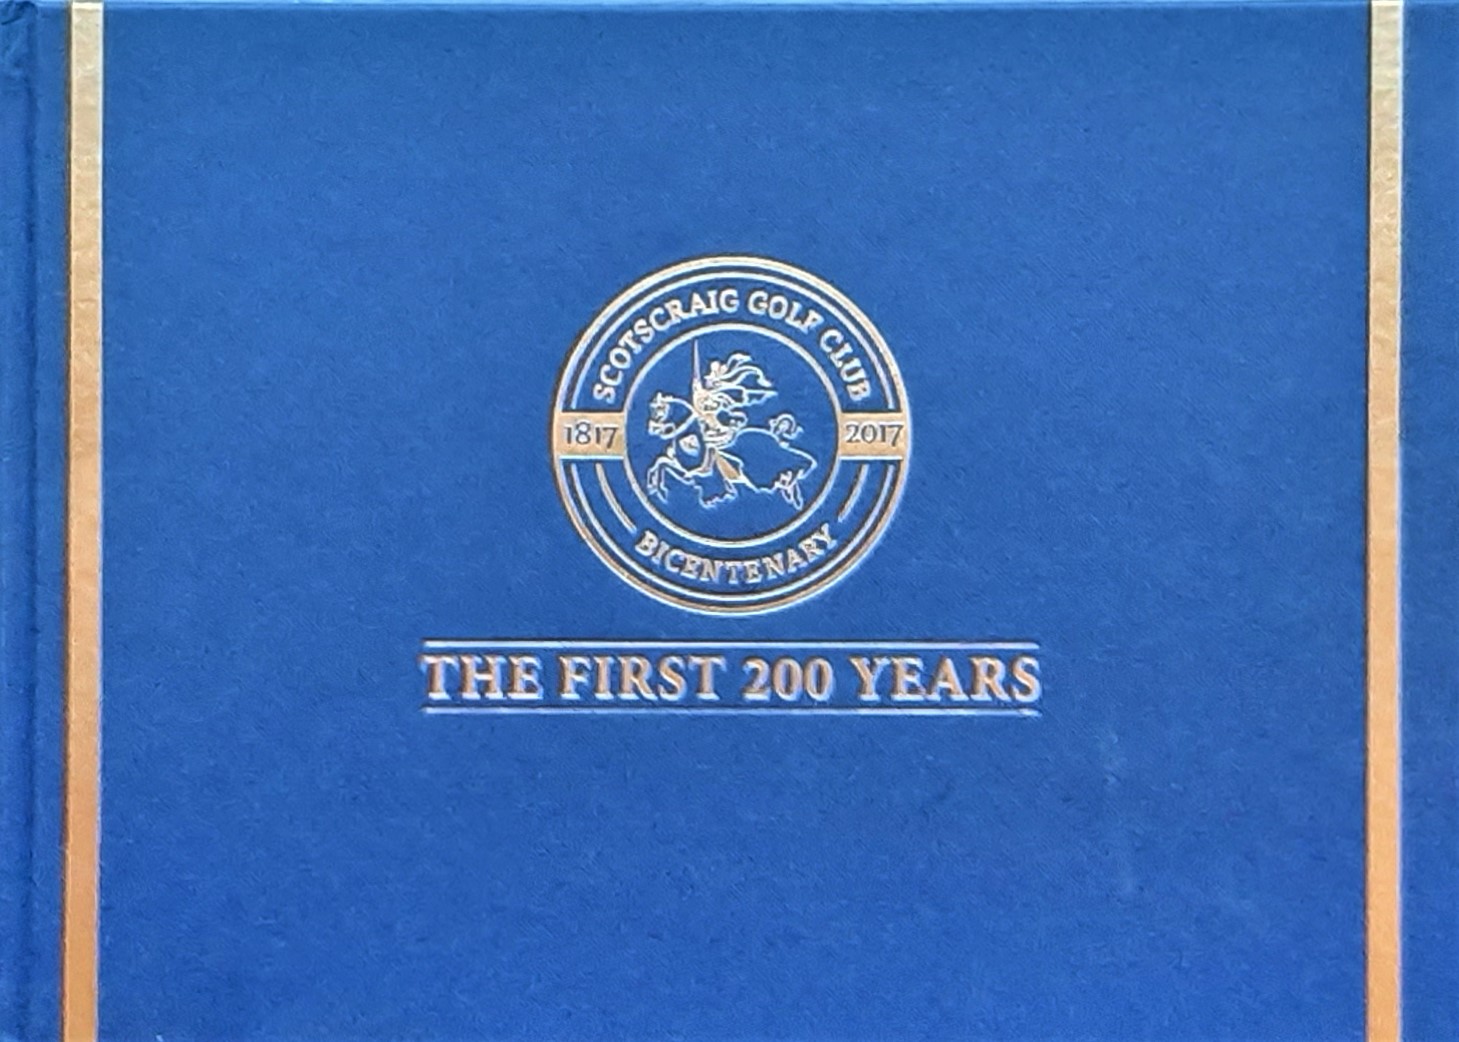 “The First 200 Years (Scotscraig Golf Club)” – David Christie (2017)